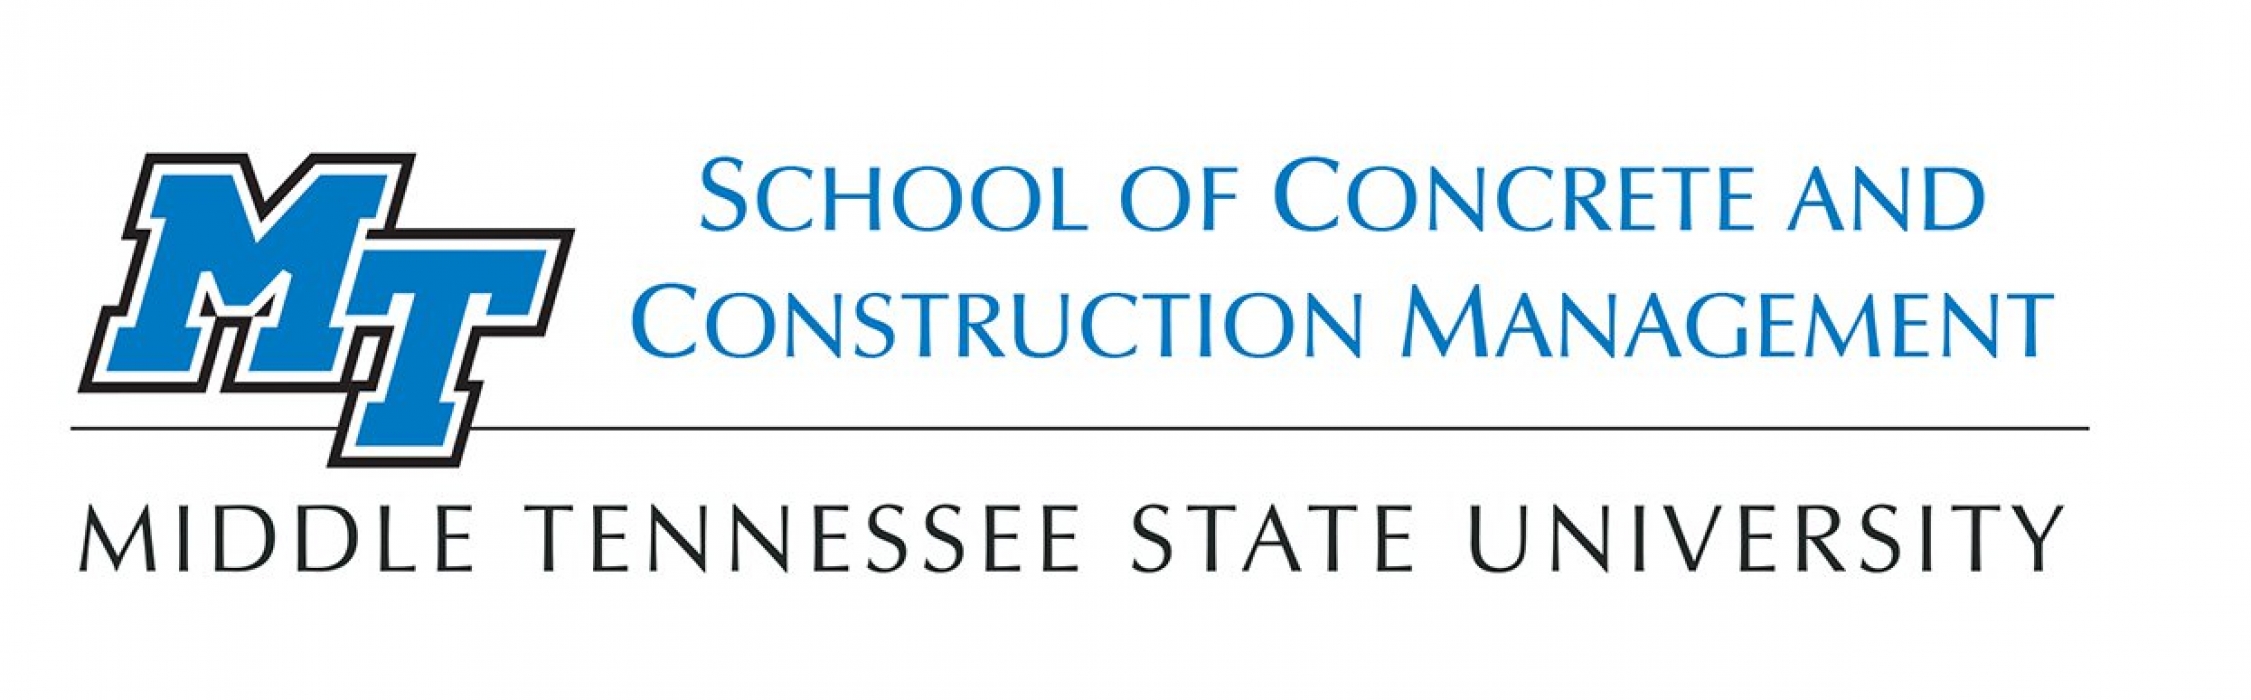 mtsu_school_of_concrete_and_construction_management_logo__002_.jpg